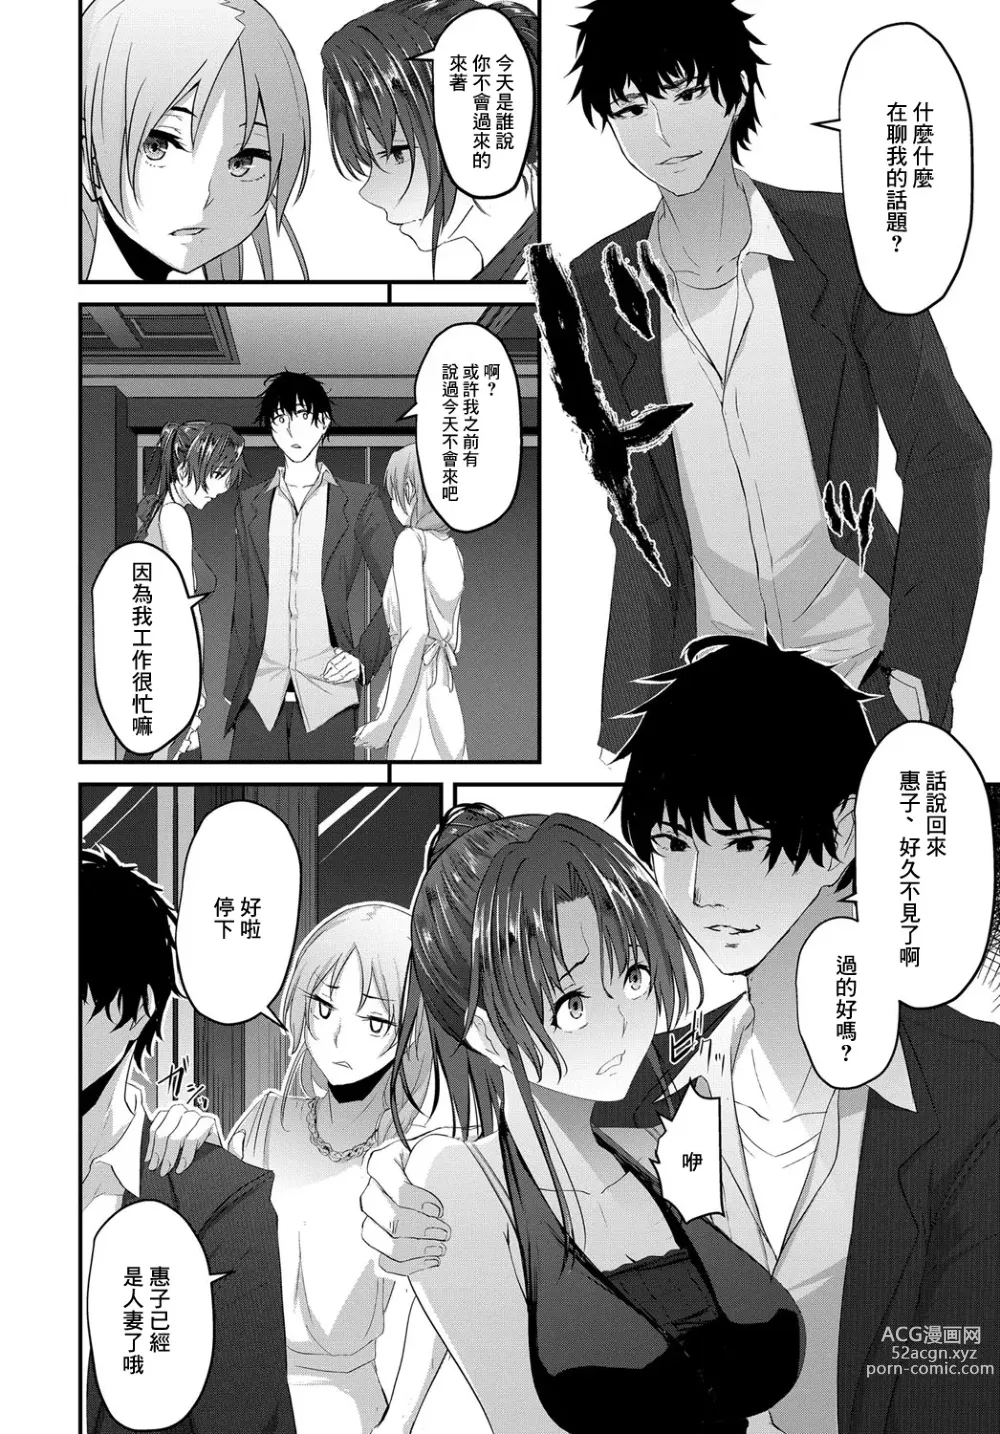 Page 4 of manga Dousoukai no Ato de